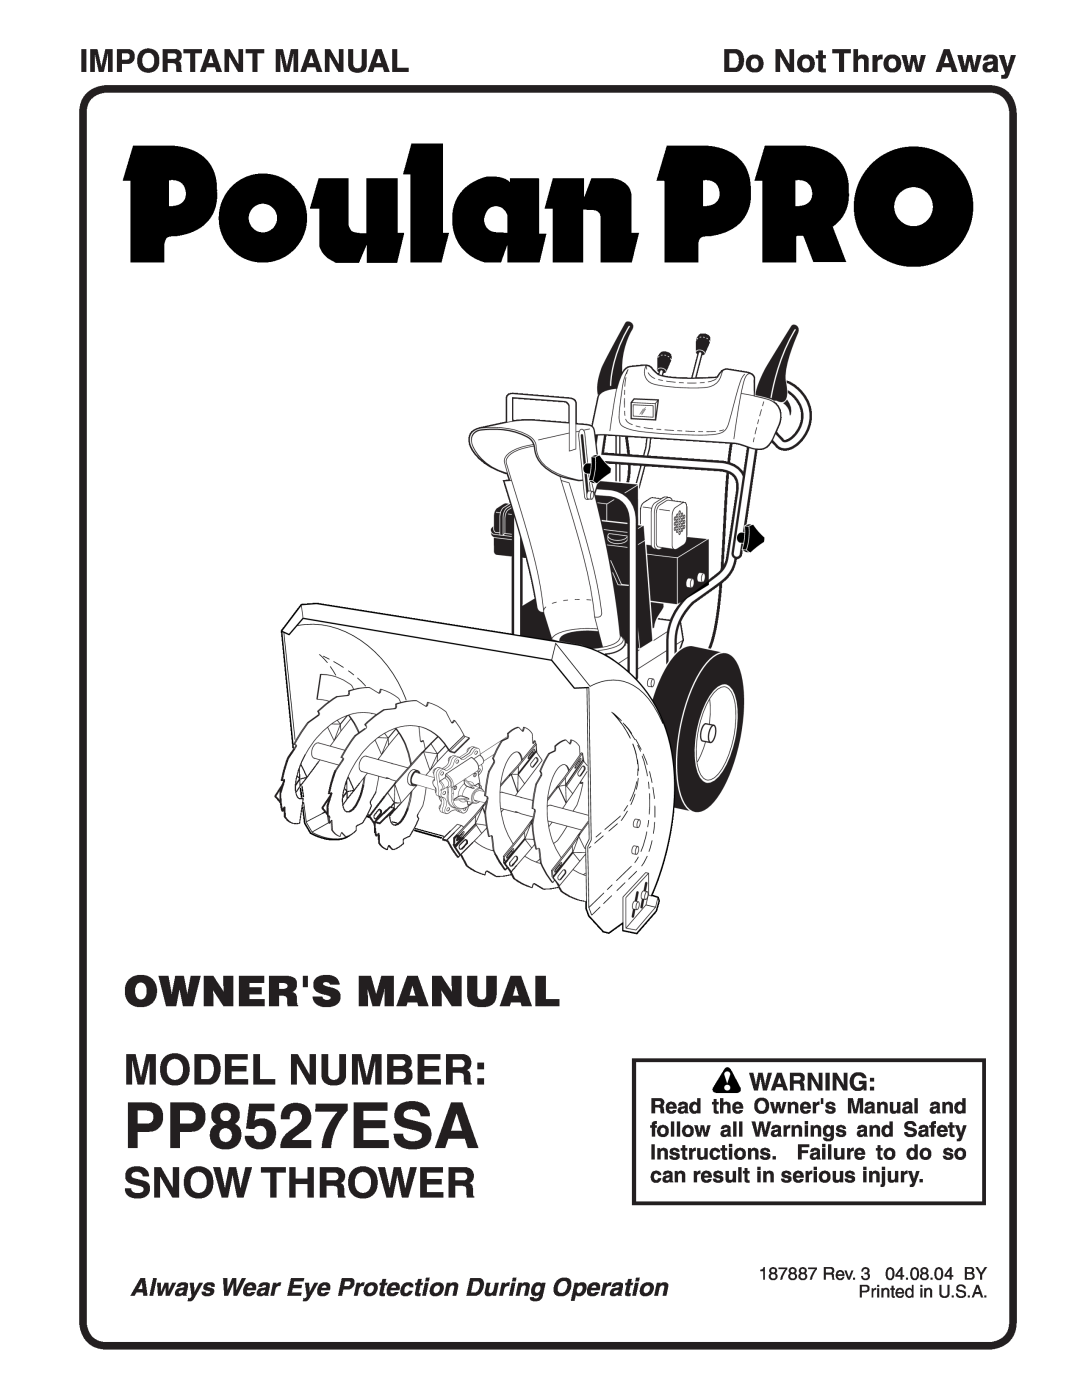 Poulan PP8527ESA owner manual Snow Thrower, Important Manual, Do Not Throw Away 